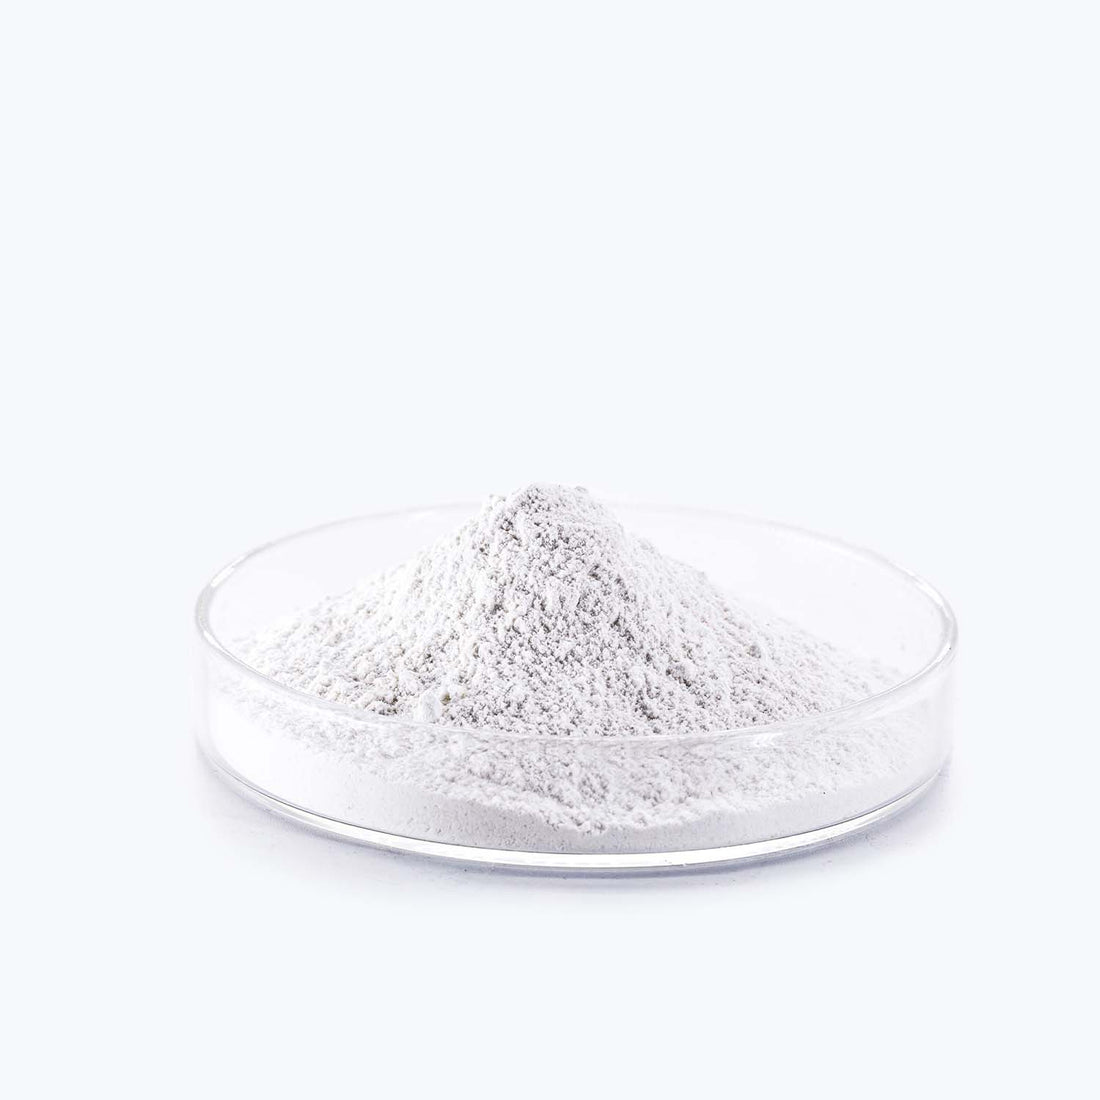 A bowl of white powder, Benzoyl Peroxide, on a white background.